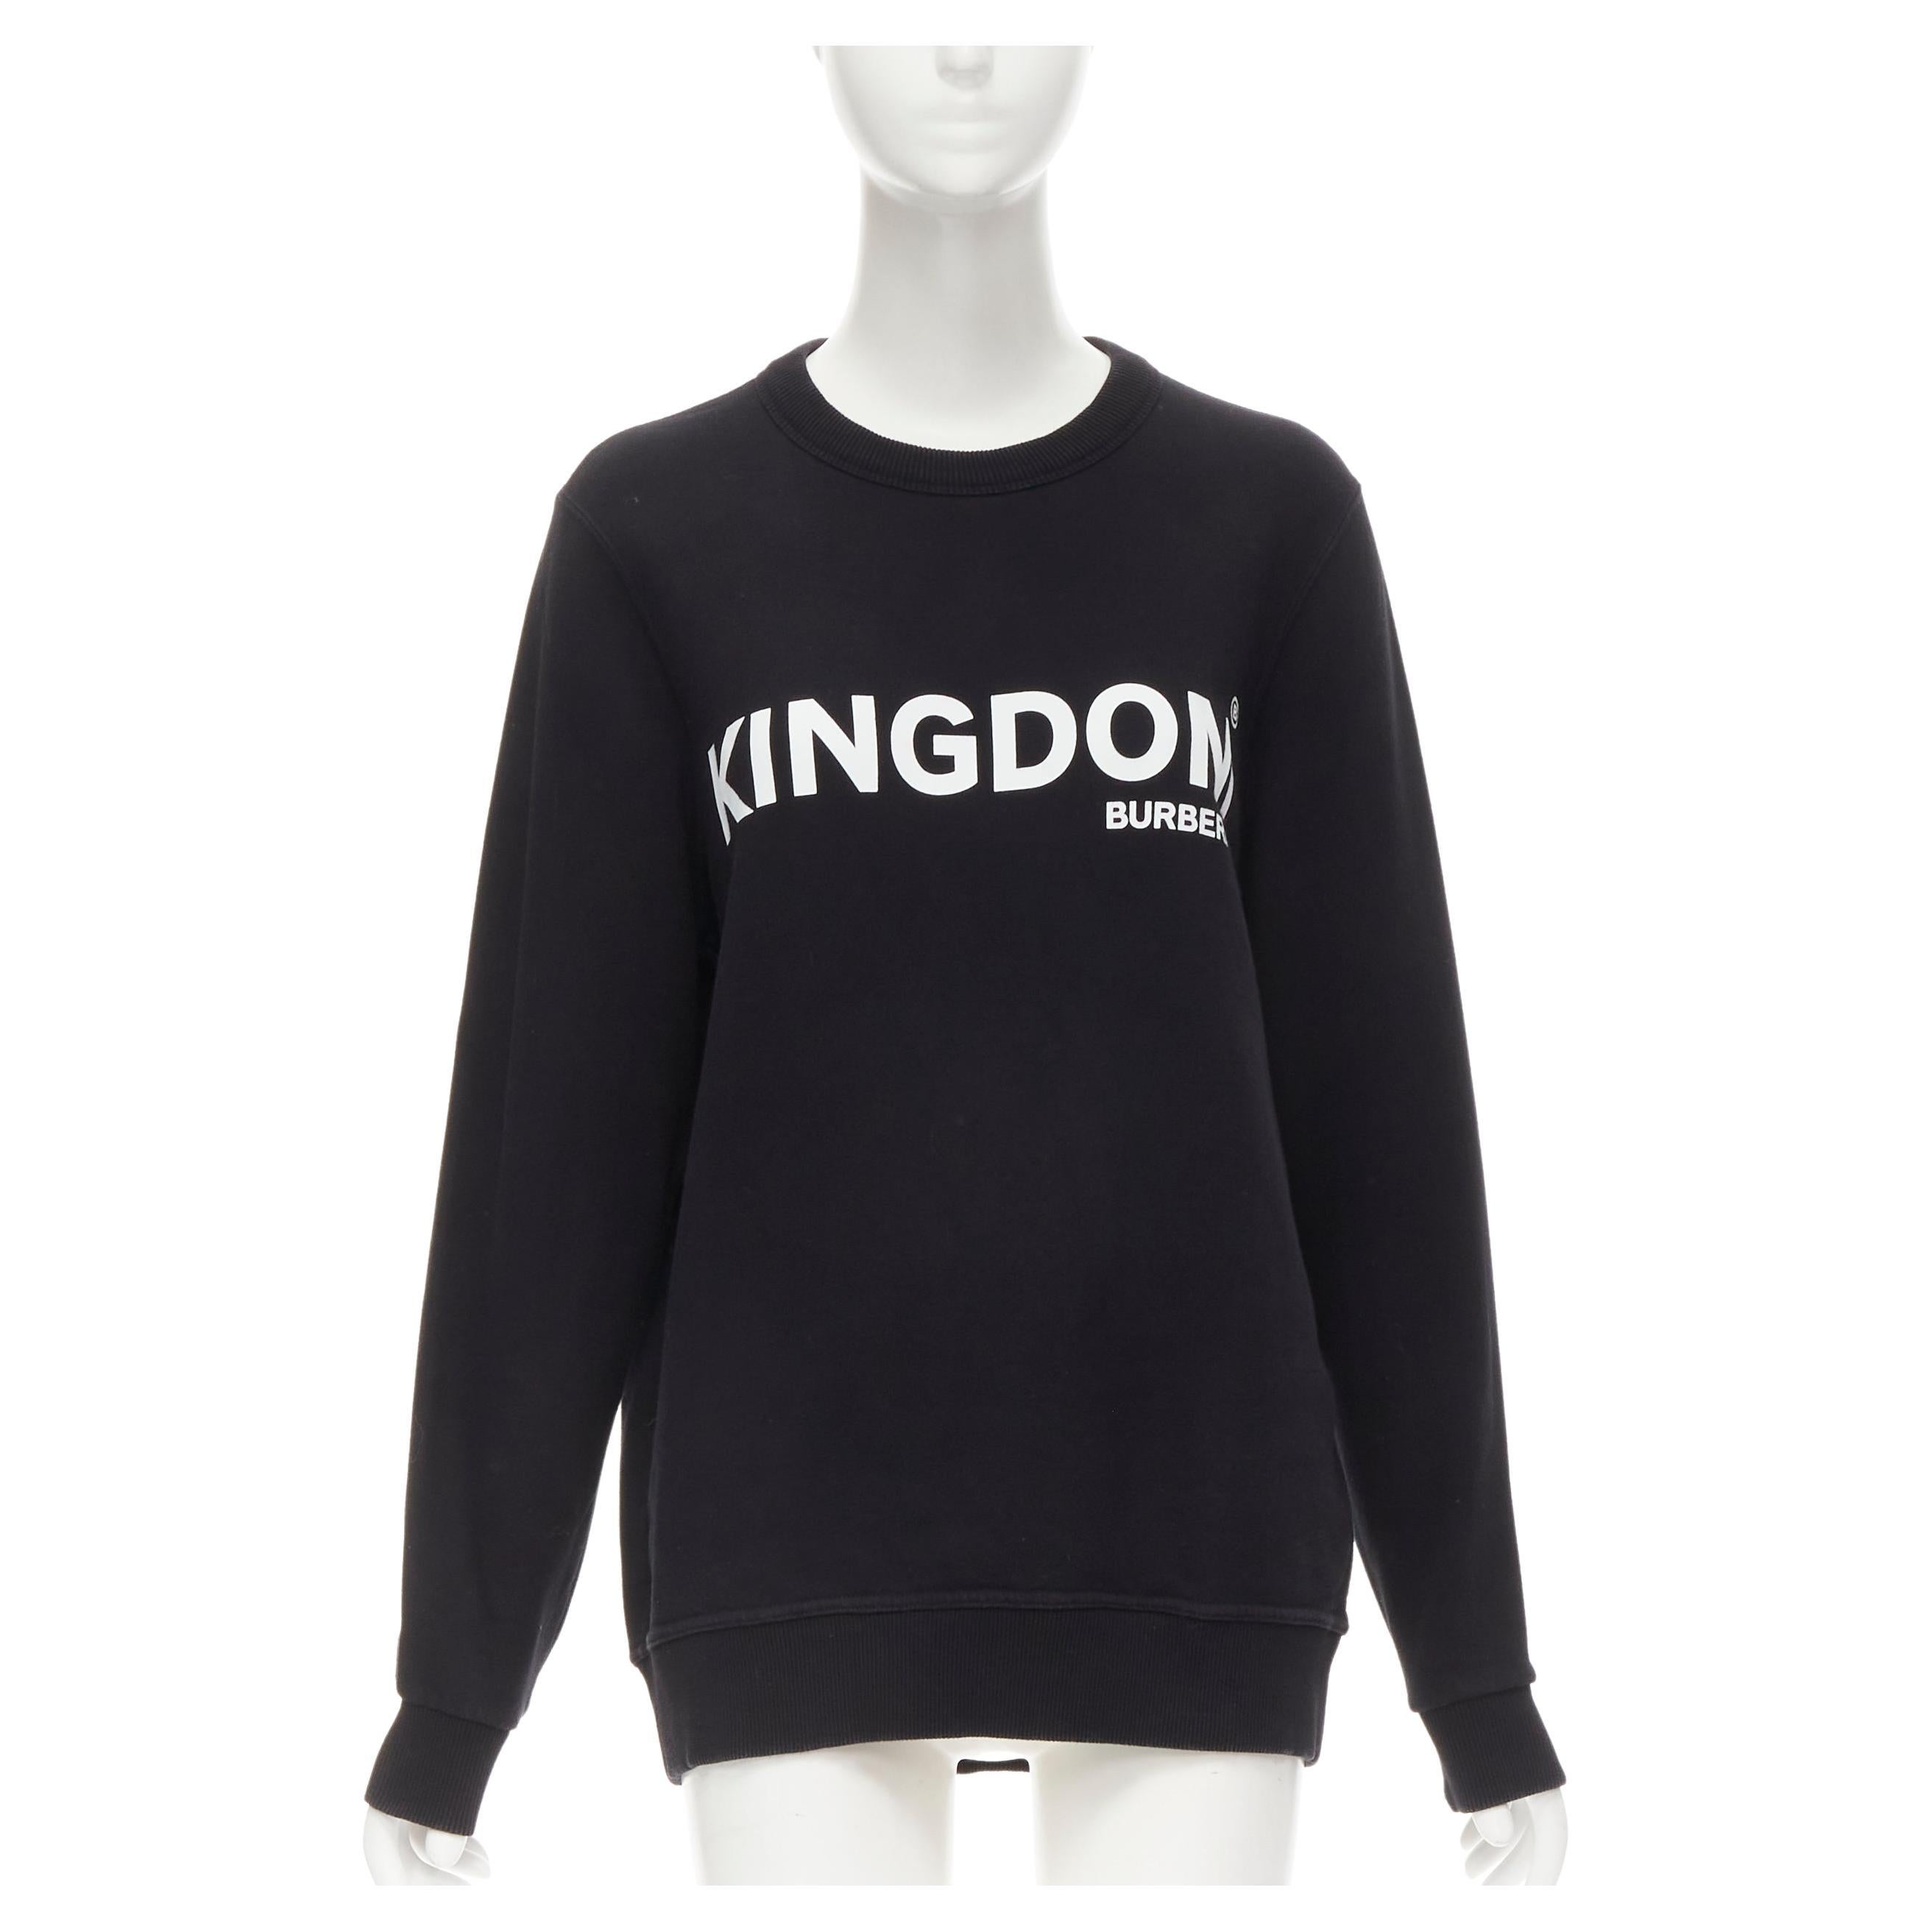 Burberry Tisci KINGDOM logo print black cotton crewneck pullover sweater M en vente